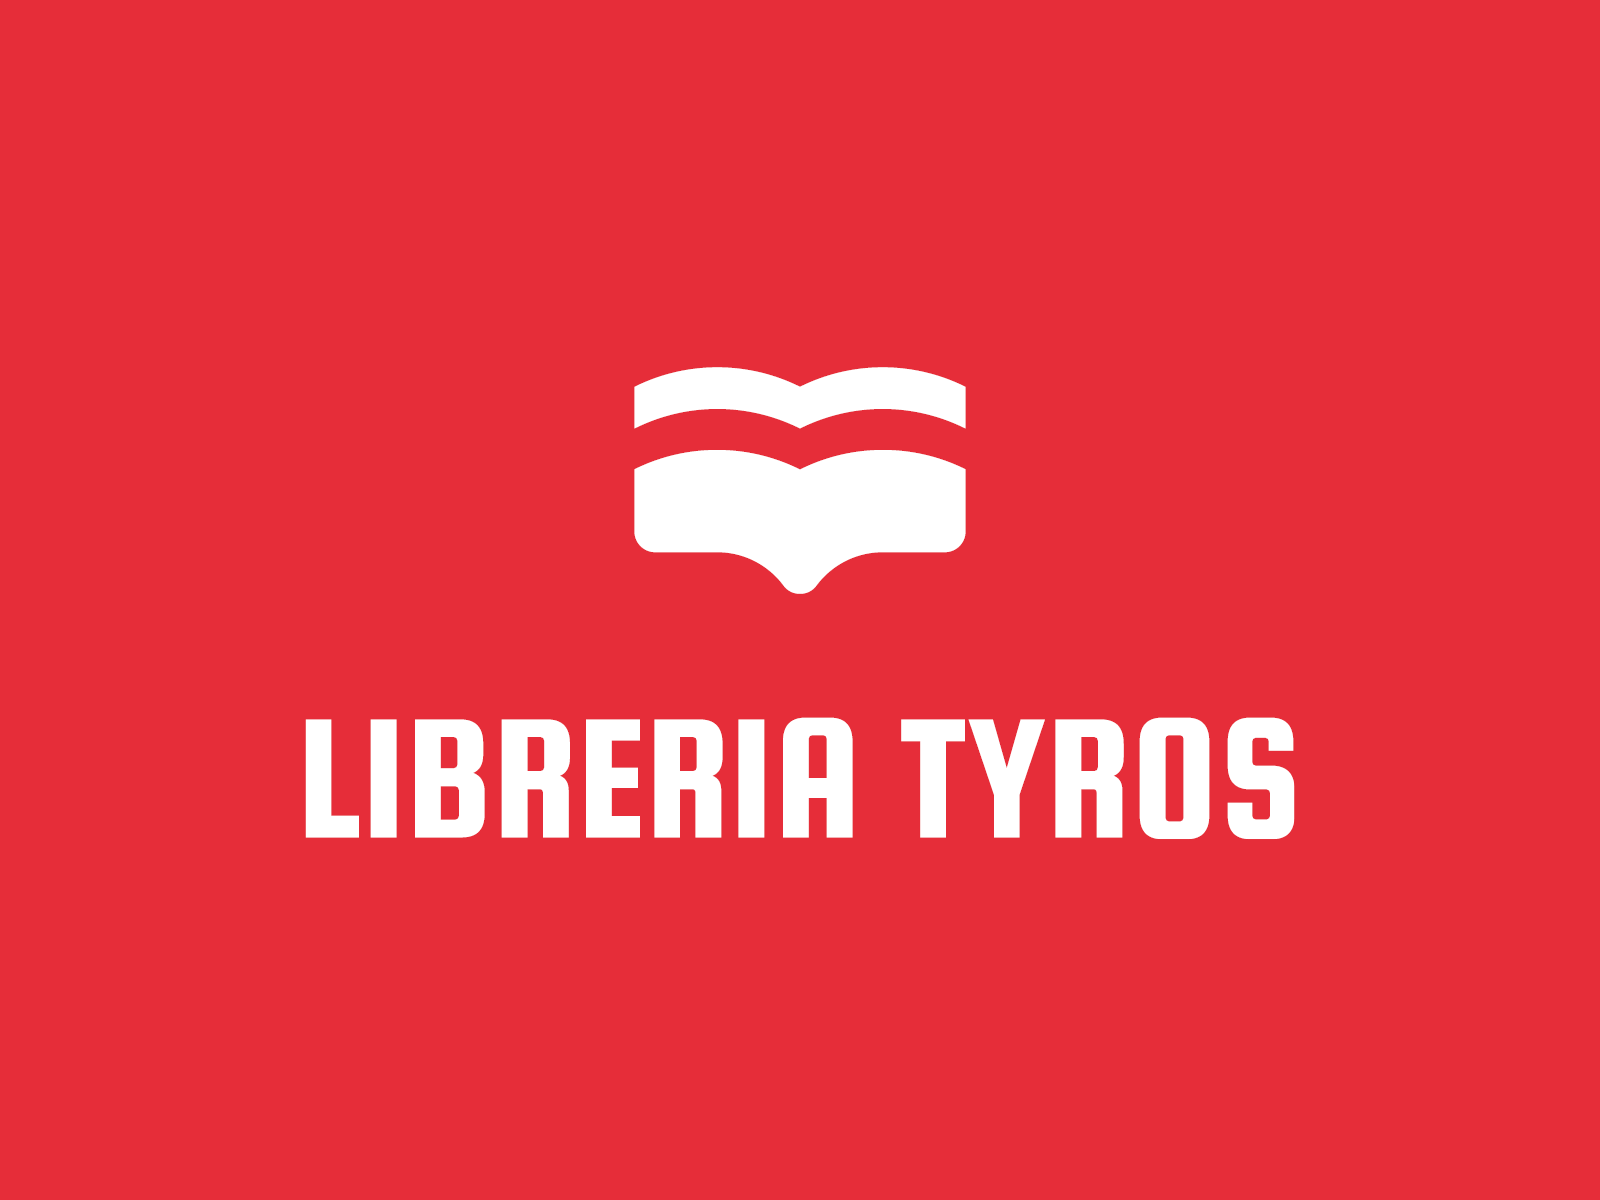 Libreria Tyros - Logo Design by taap studio on Dribbble